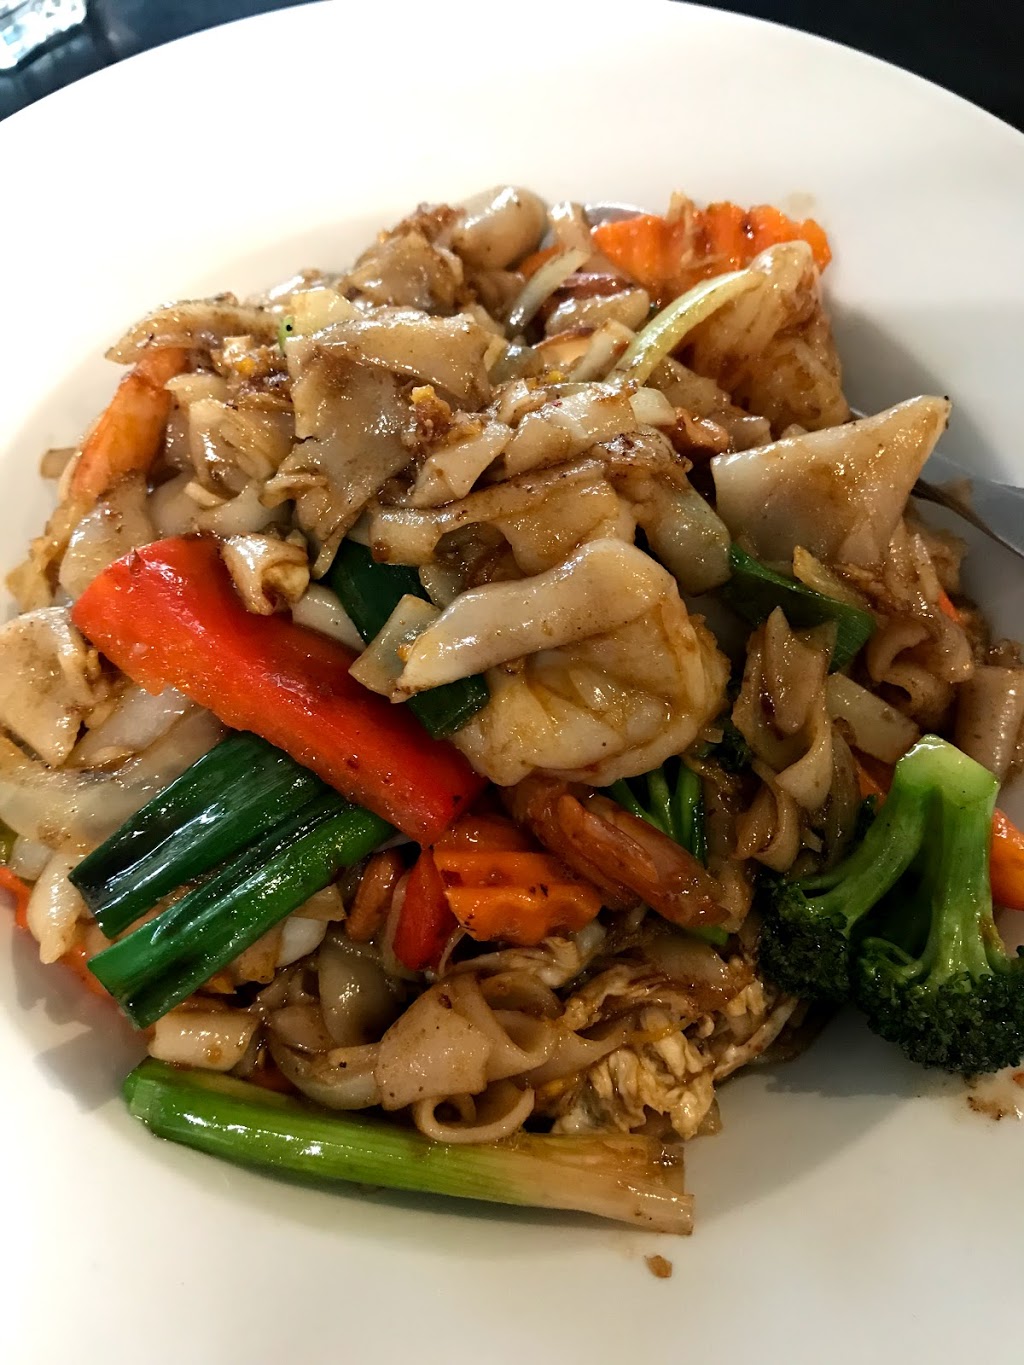 Thai Khaen Khoon Restaurant | meal delivery | 12 Lawrence St, Freshwater NSW 2096, Australia | 0299058484 OR +61 2 9905 8484